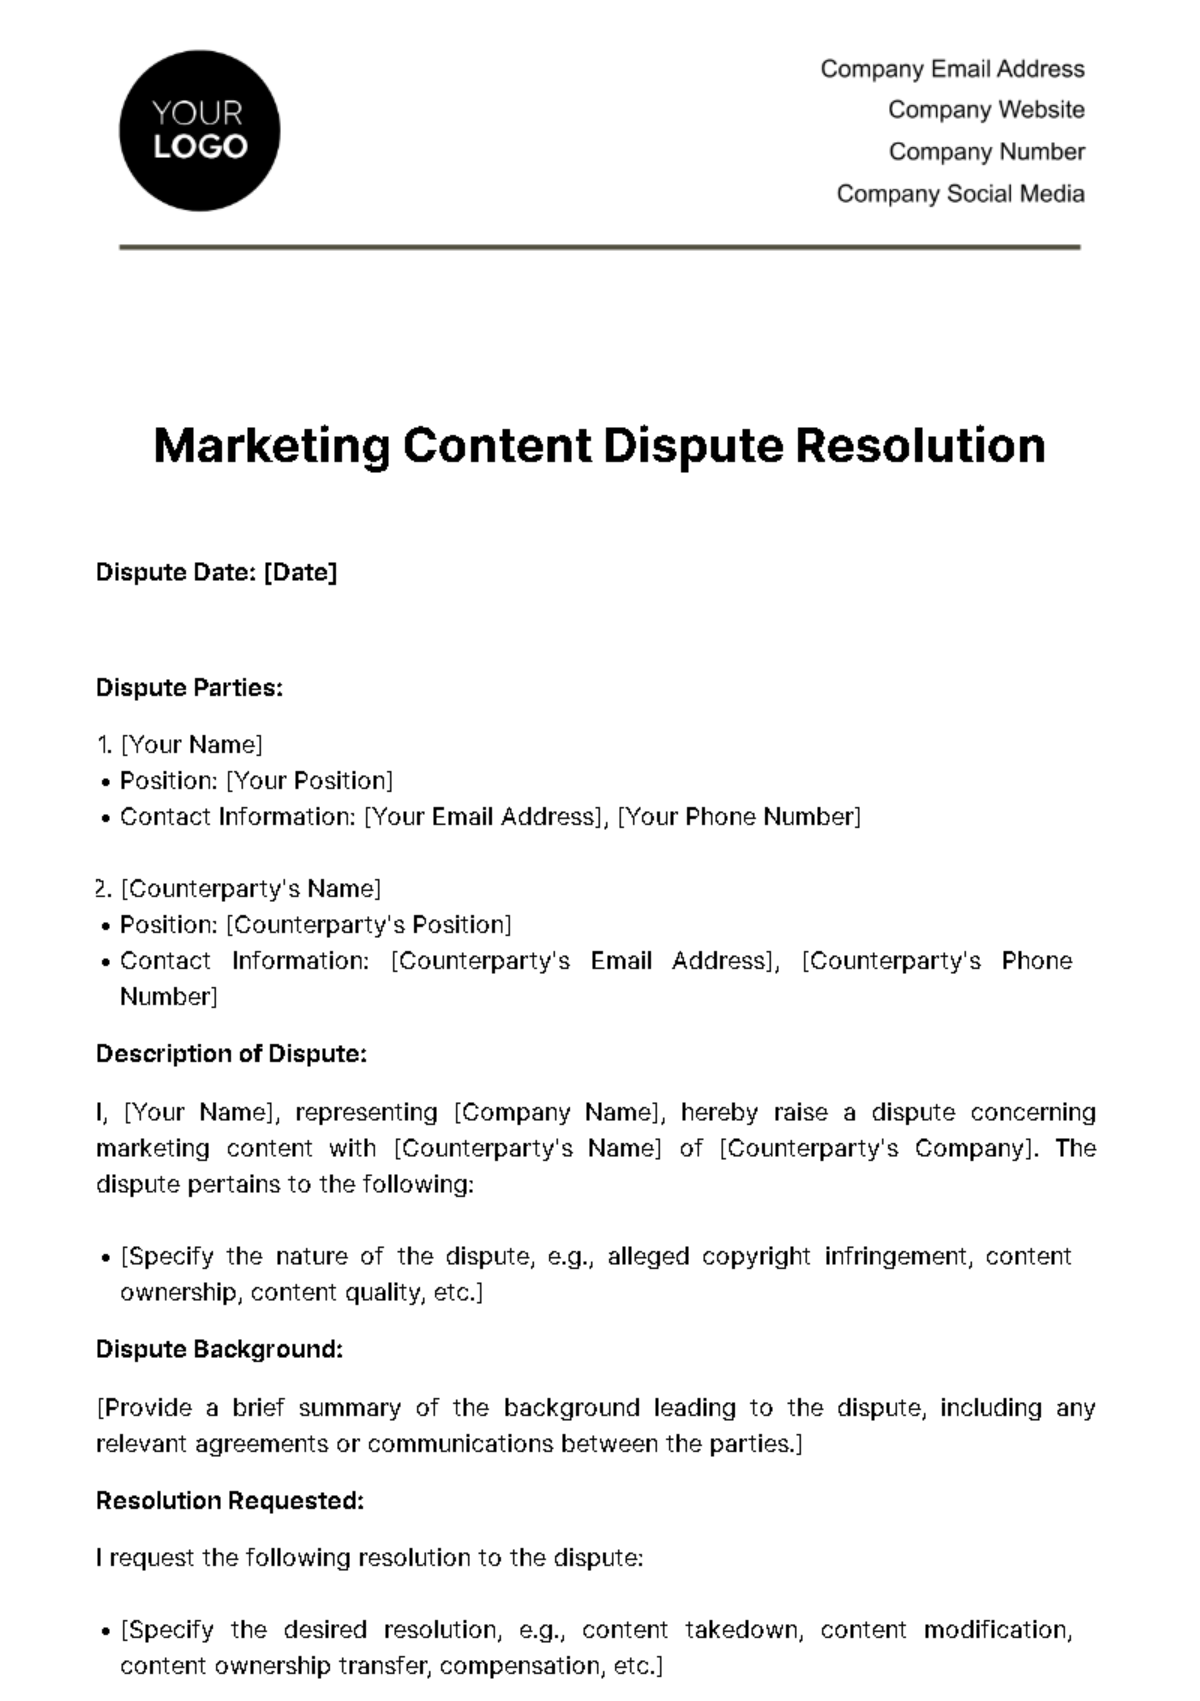 Marketing Content Dispute Resolution Template